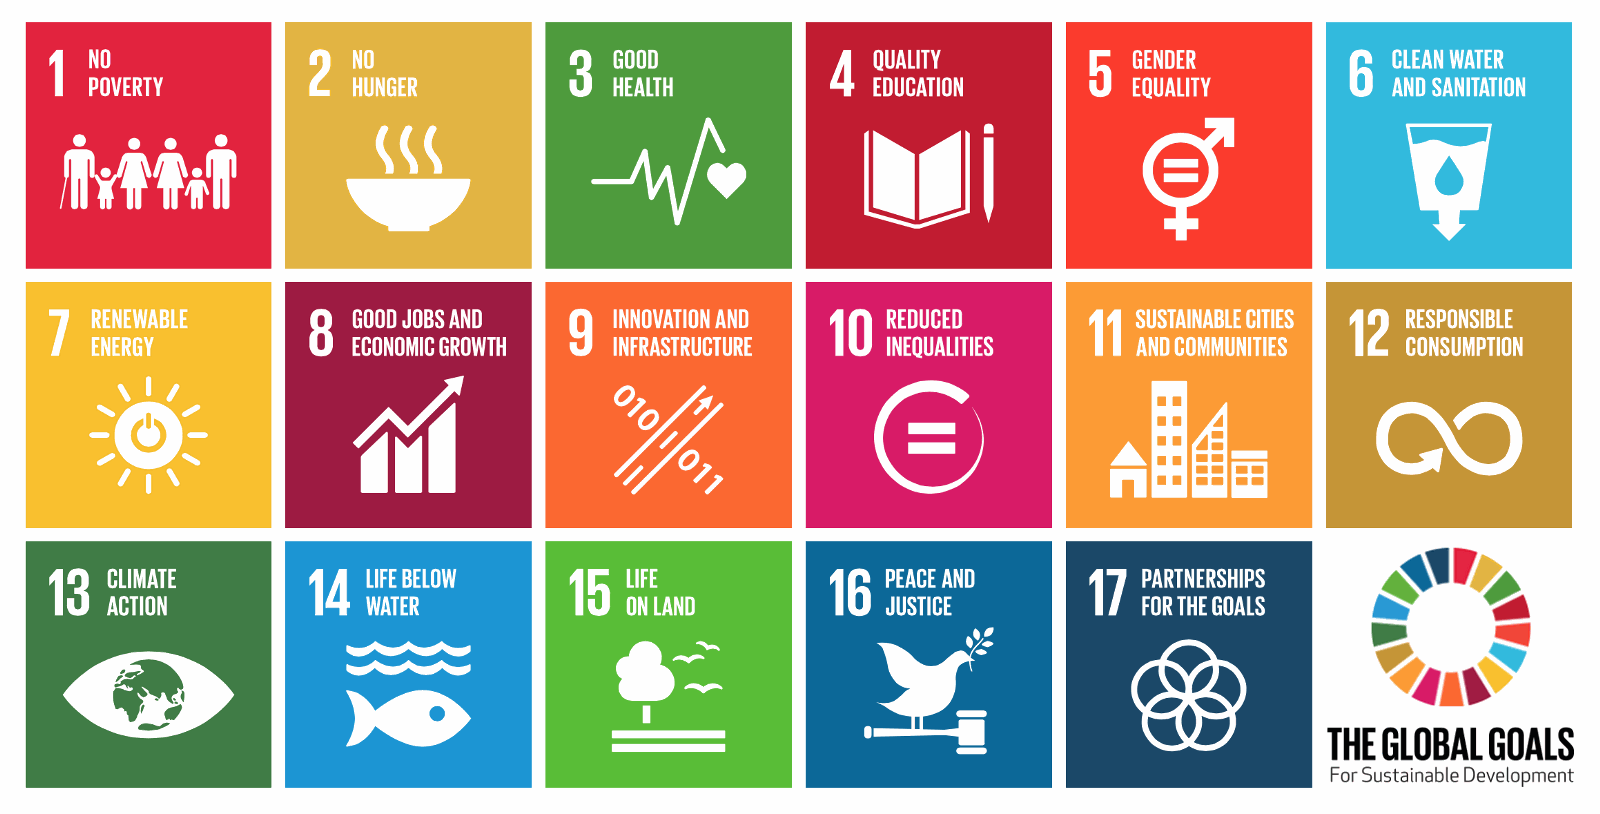 UN-Sustainability-goals.png